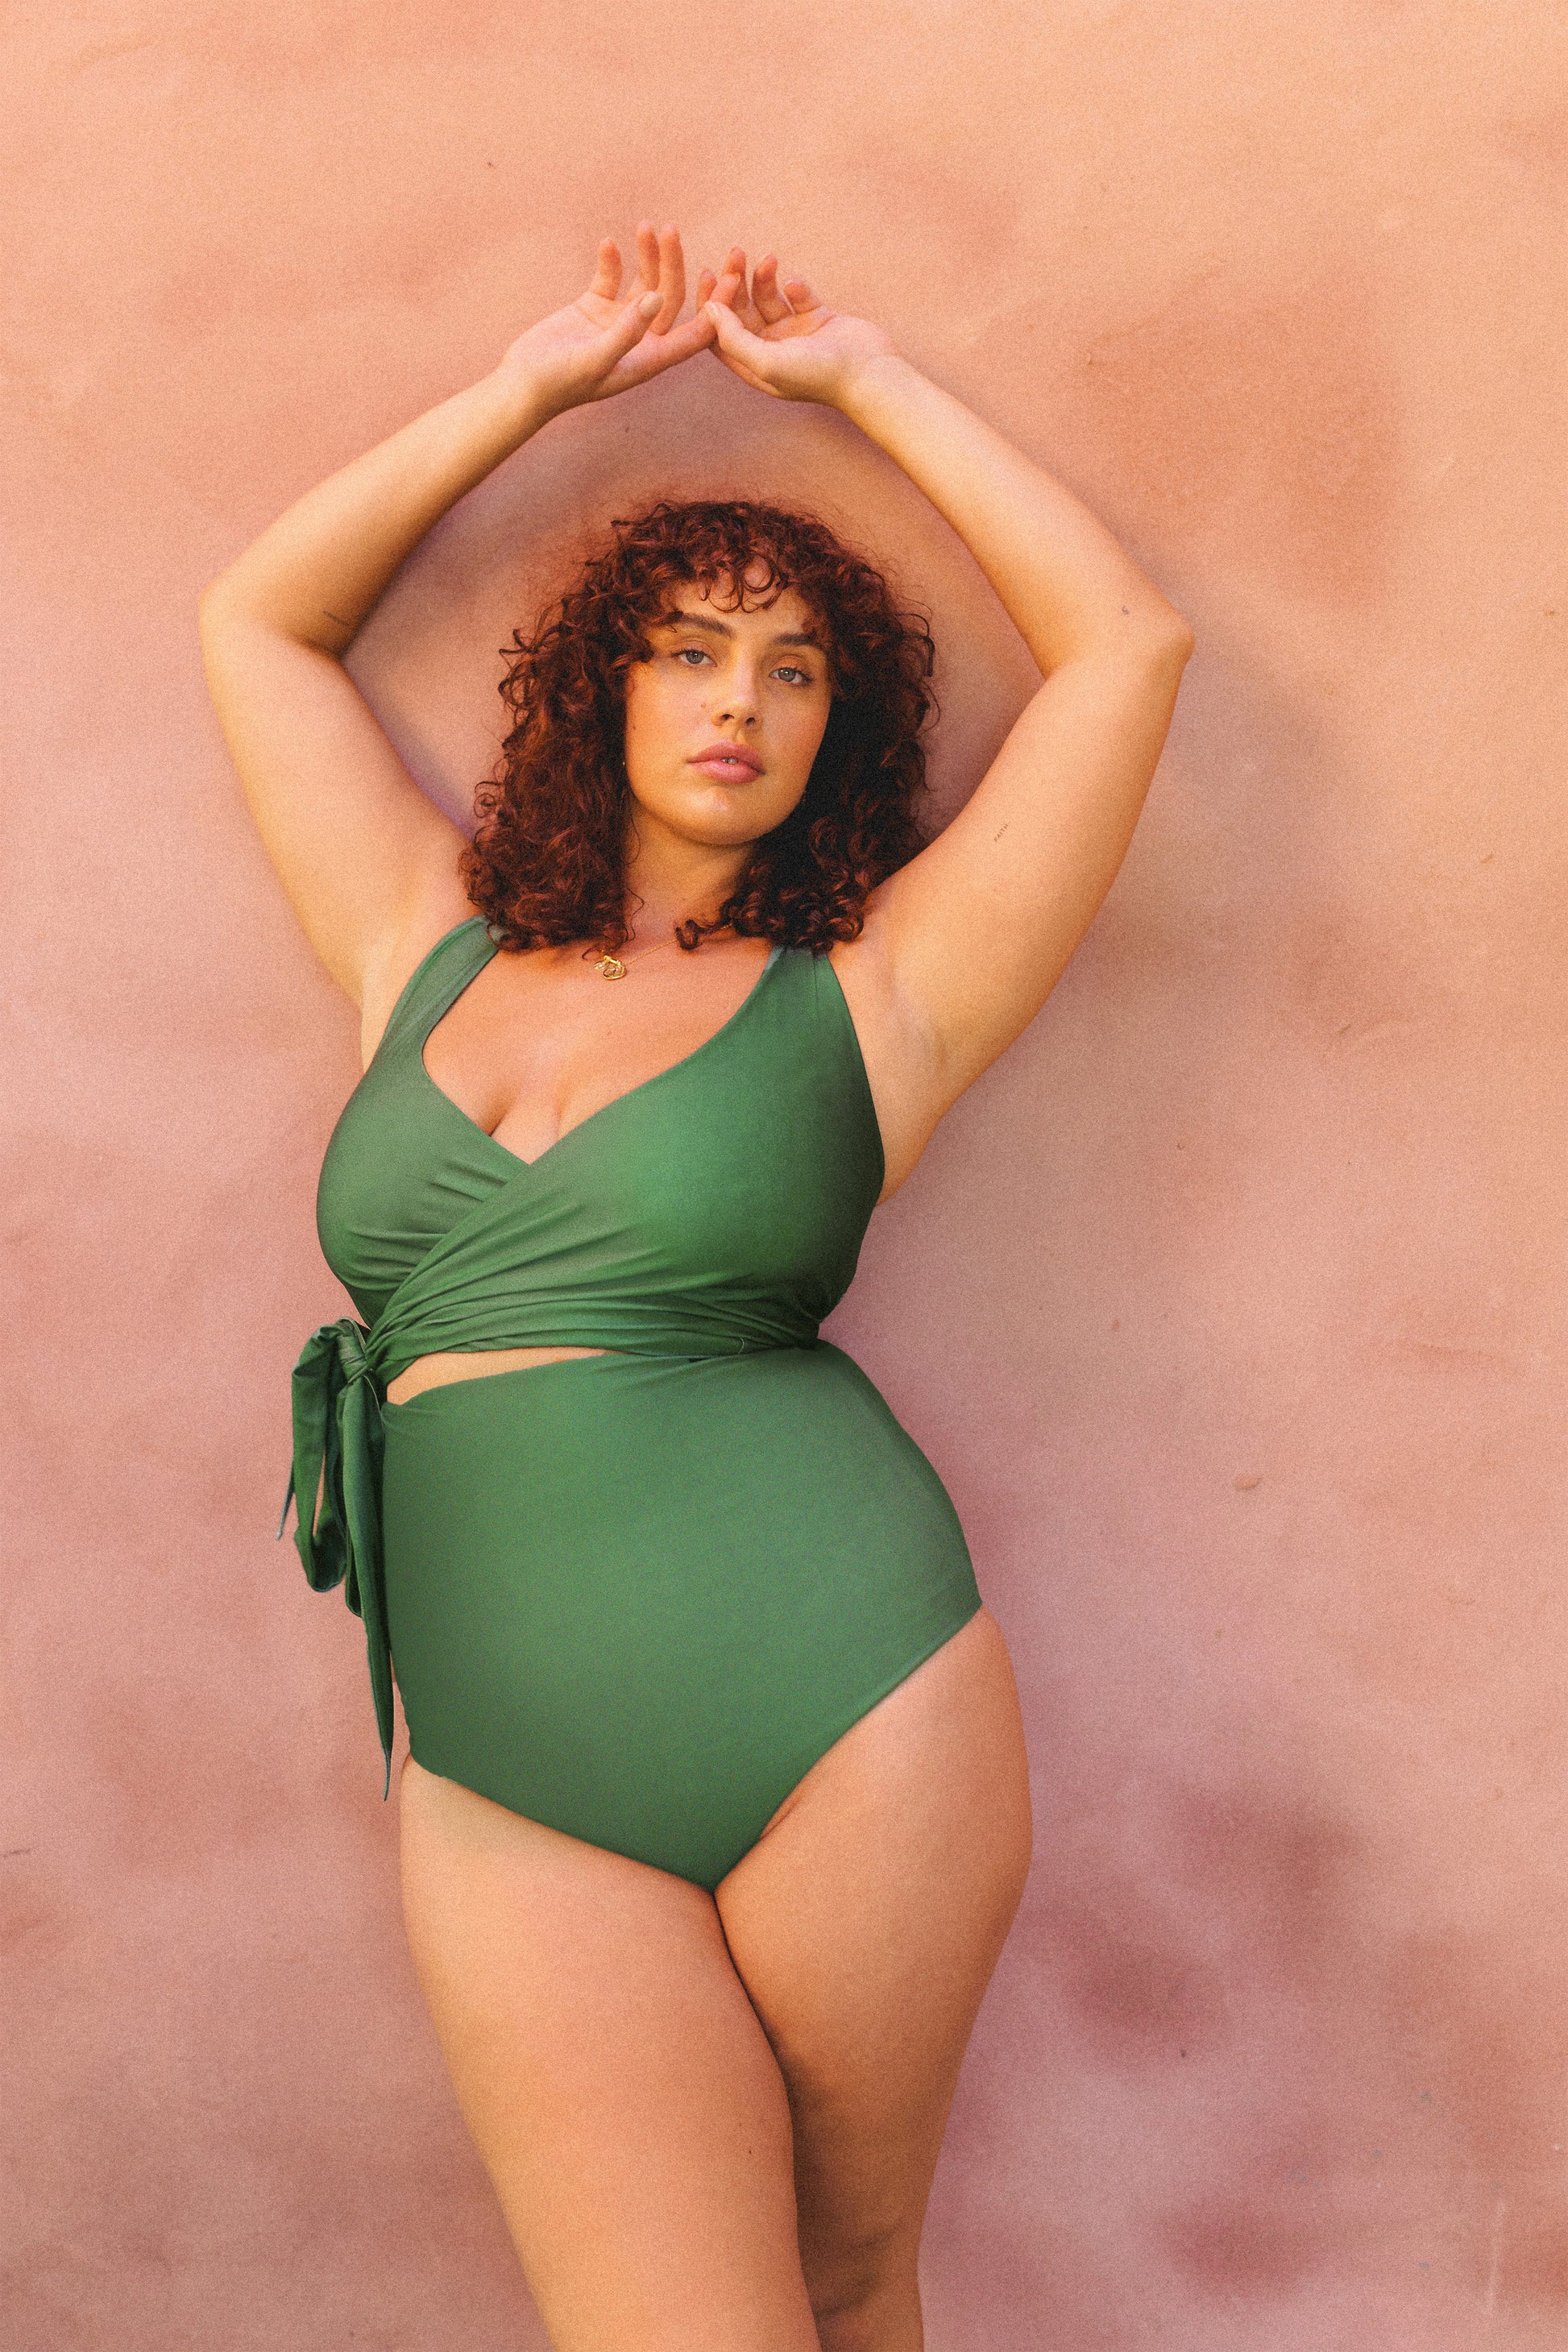 Woman leaning against wall, wearing a green 3 piece bikini.